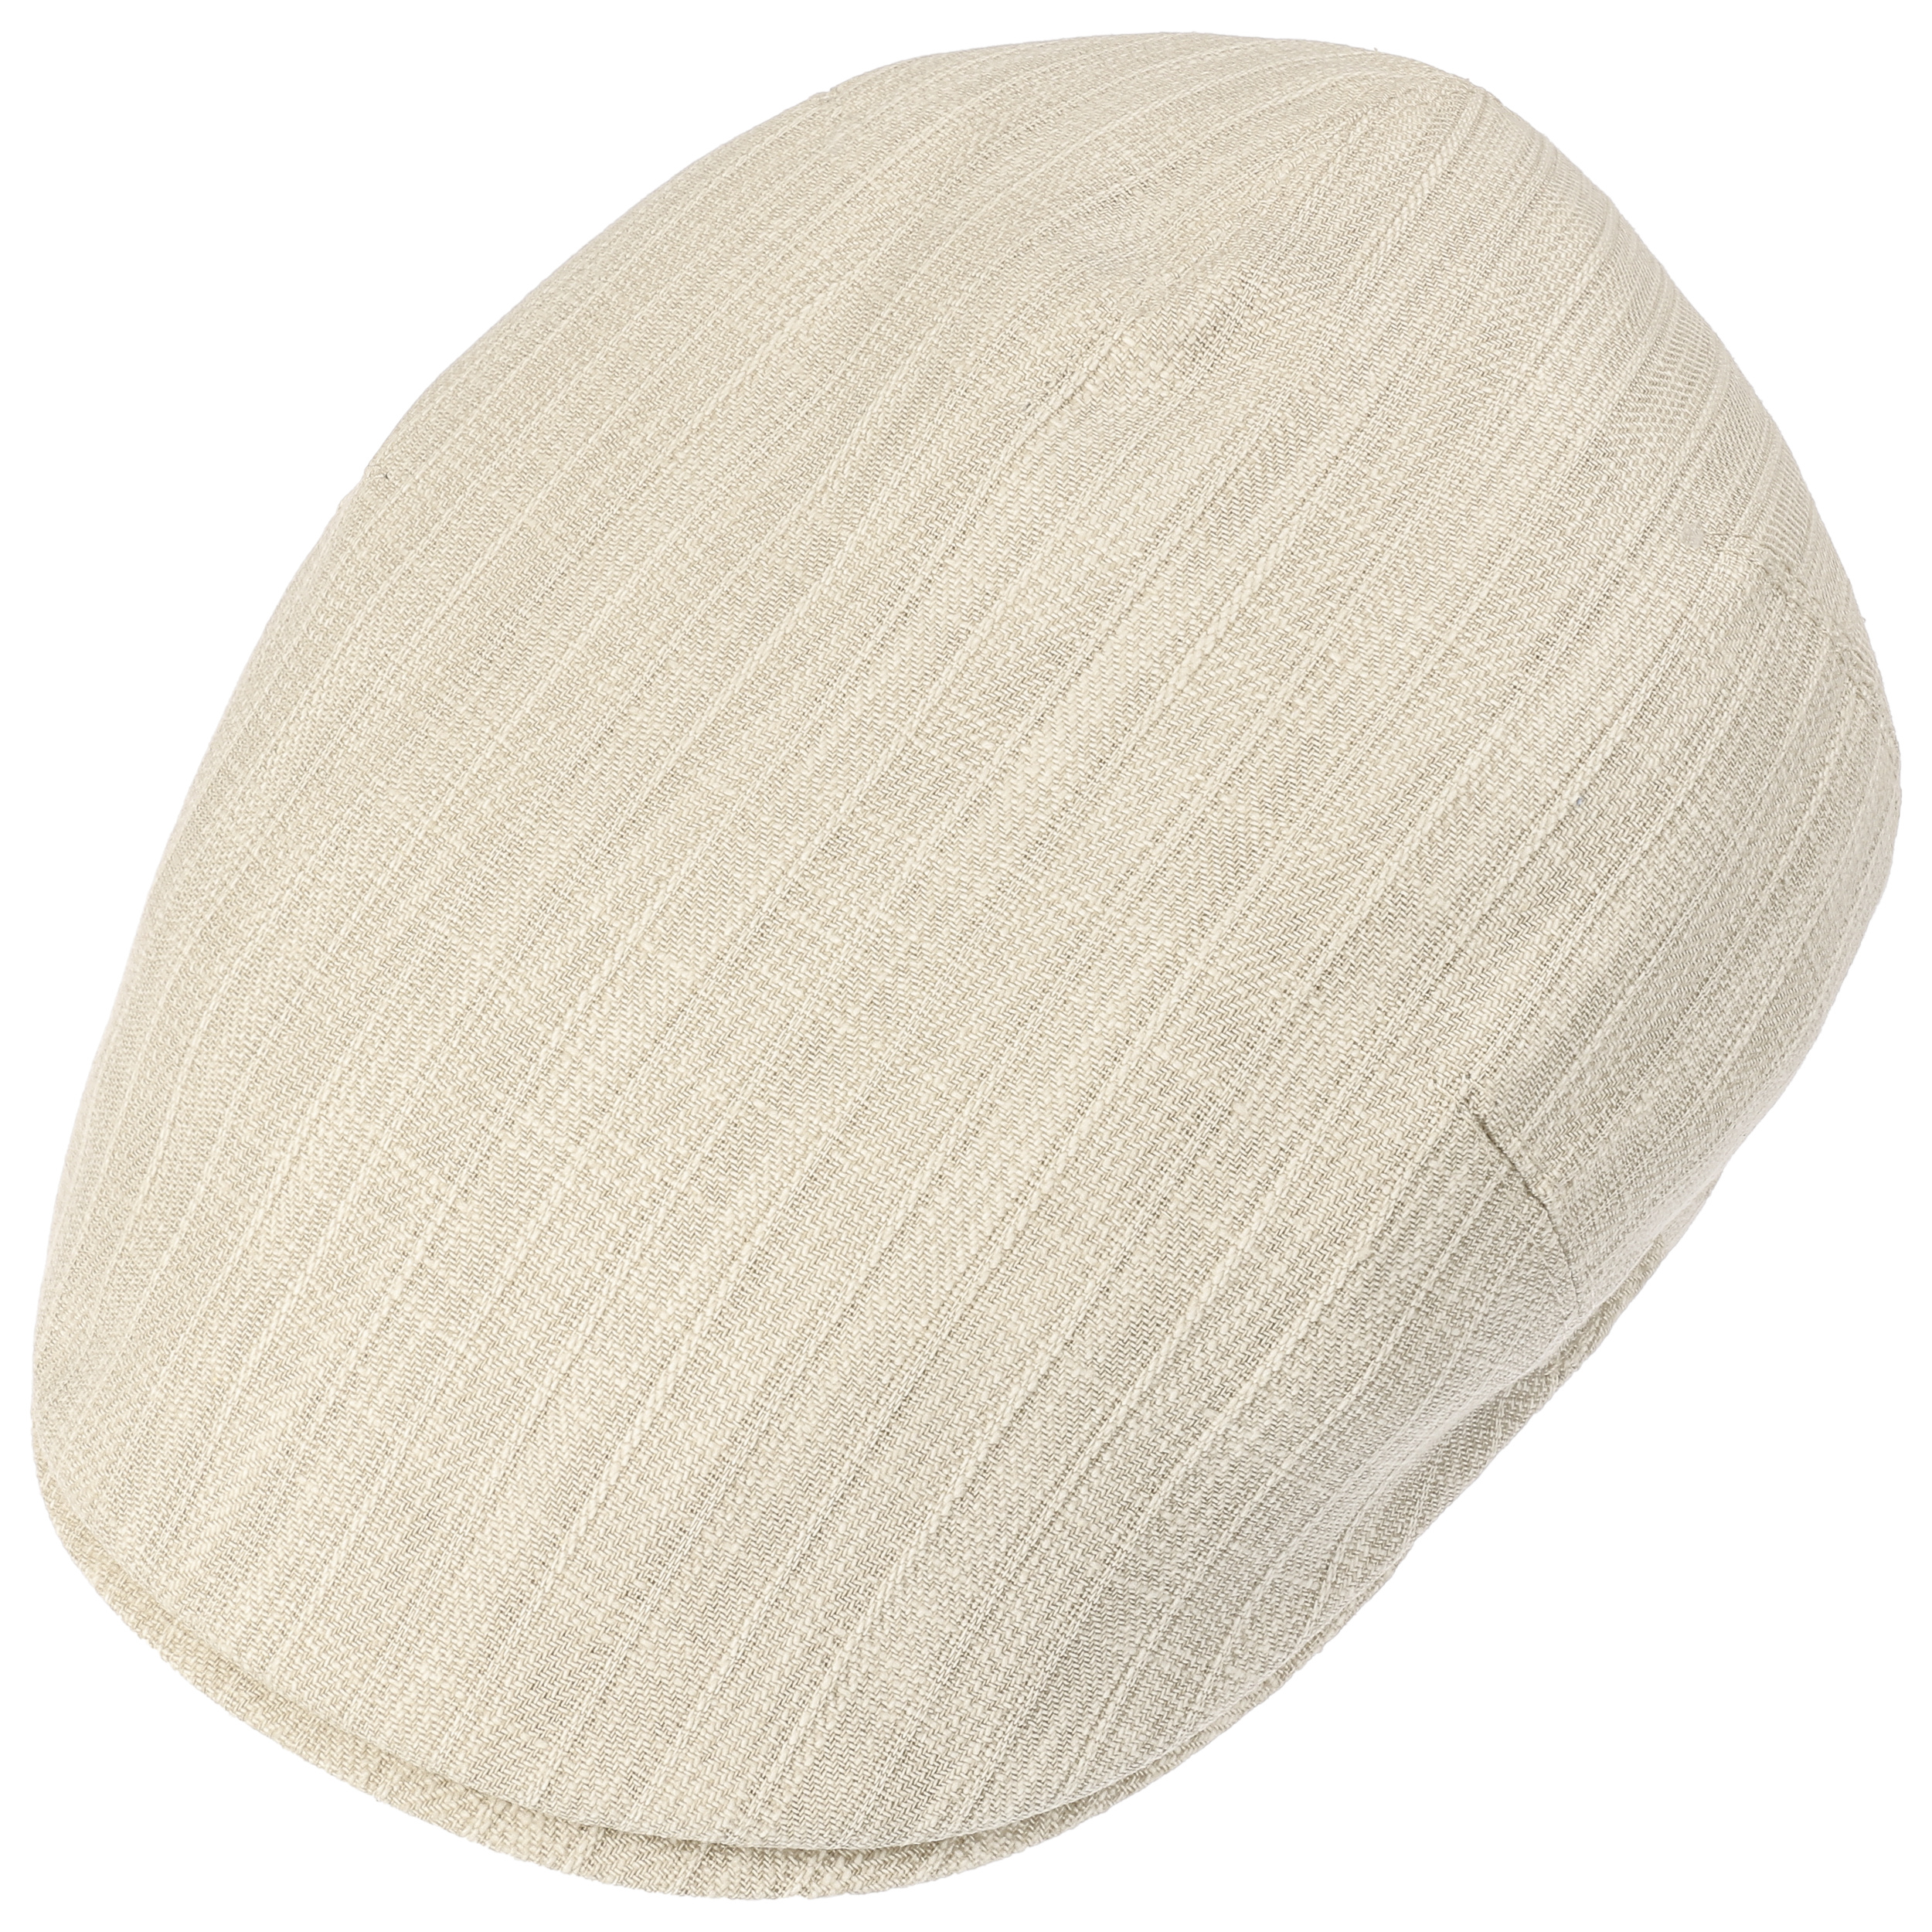 Linen-Cotton - Flat Cap 83,95 Lierys € Timothy by